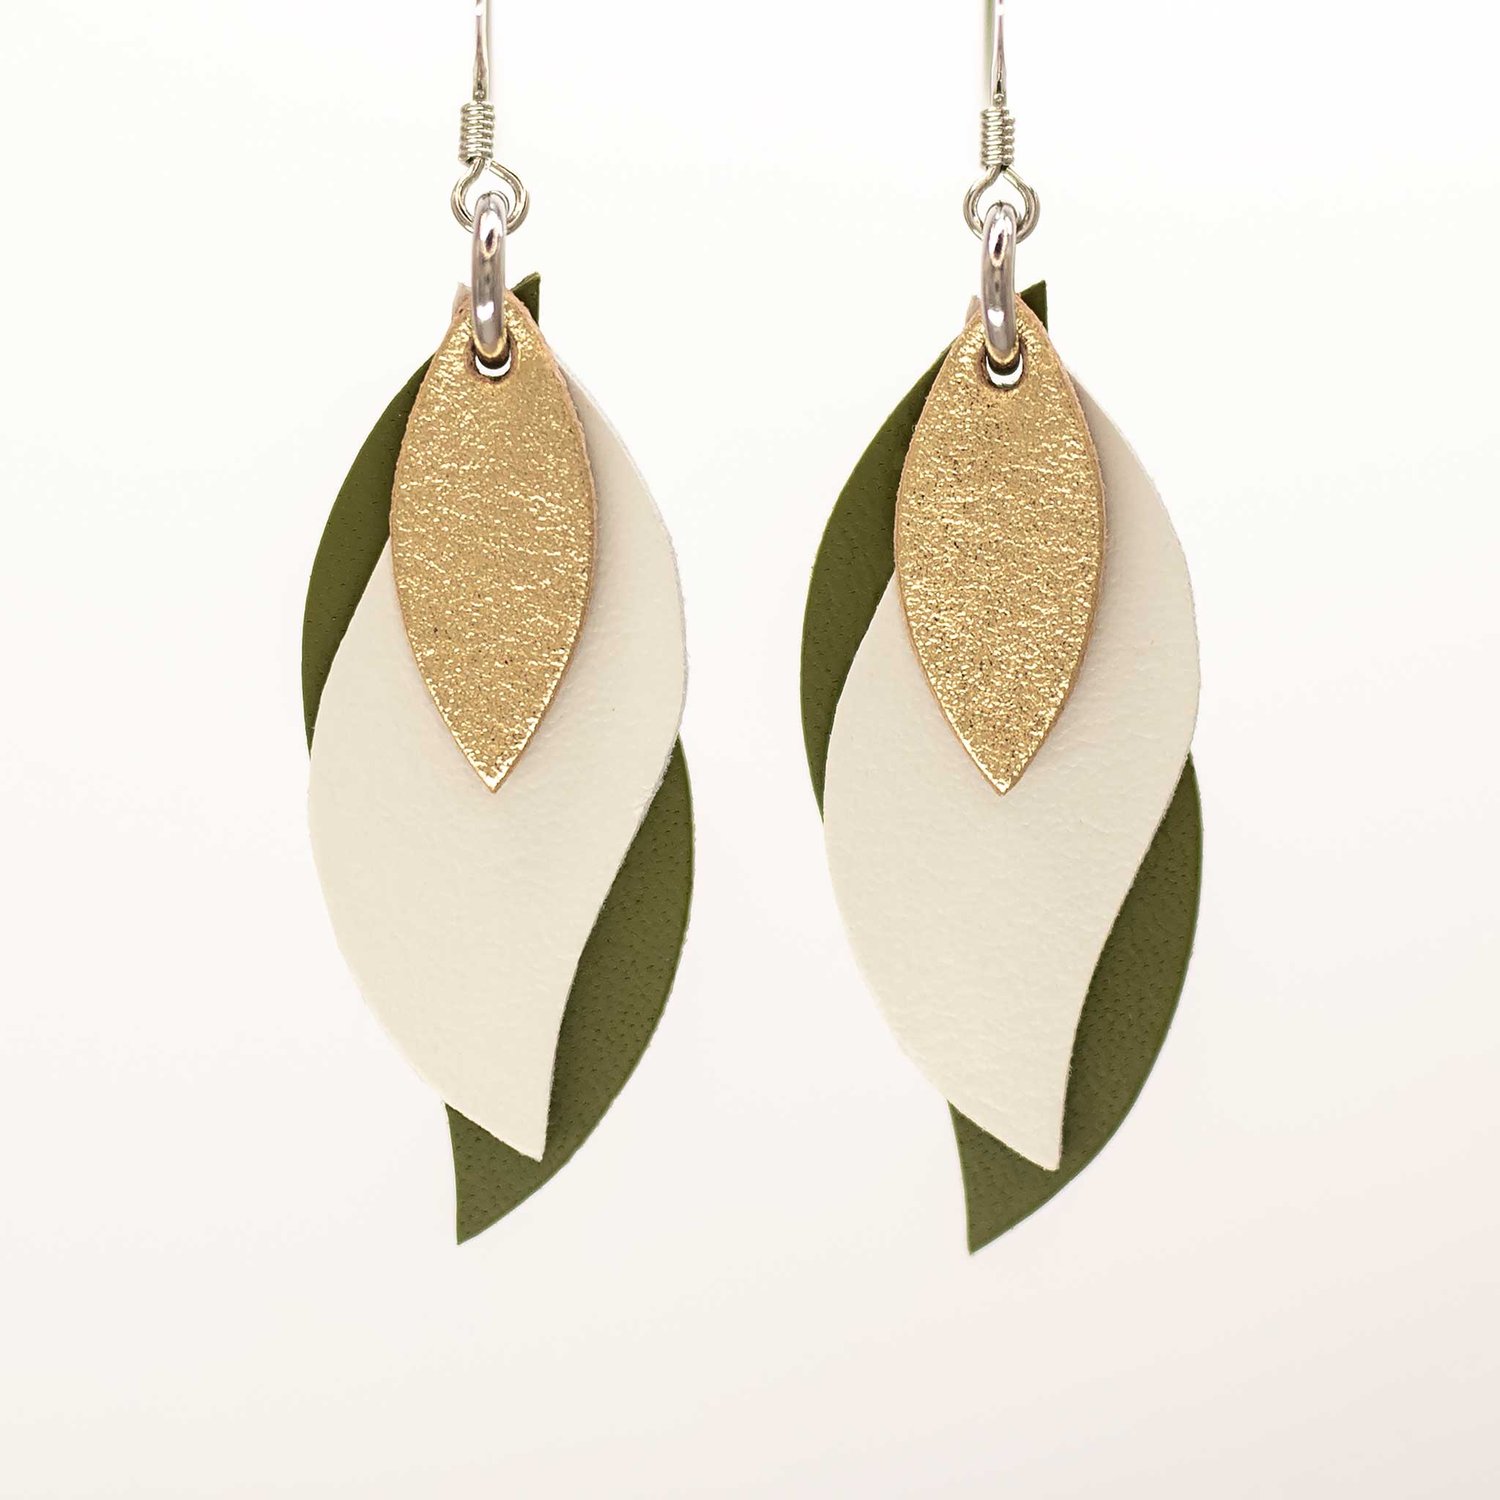 Image of Handmade Australian leather leaf earrings - Gold, cream, olive [LMT-210]